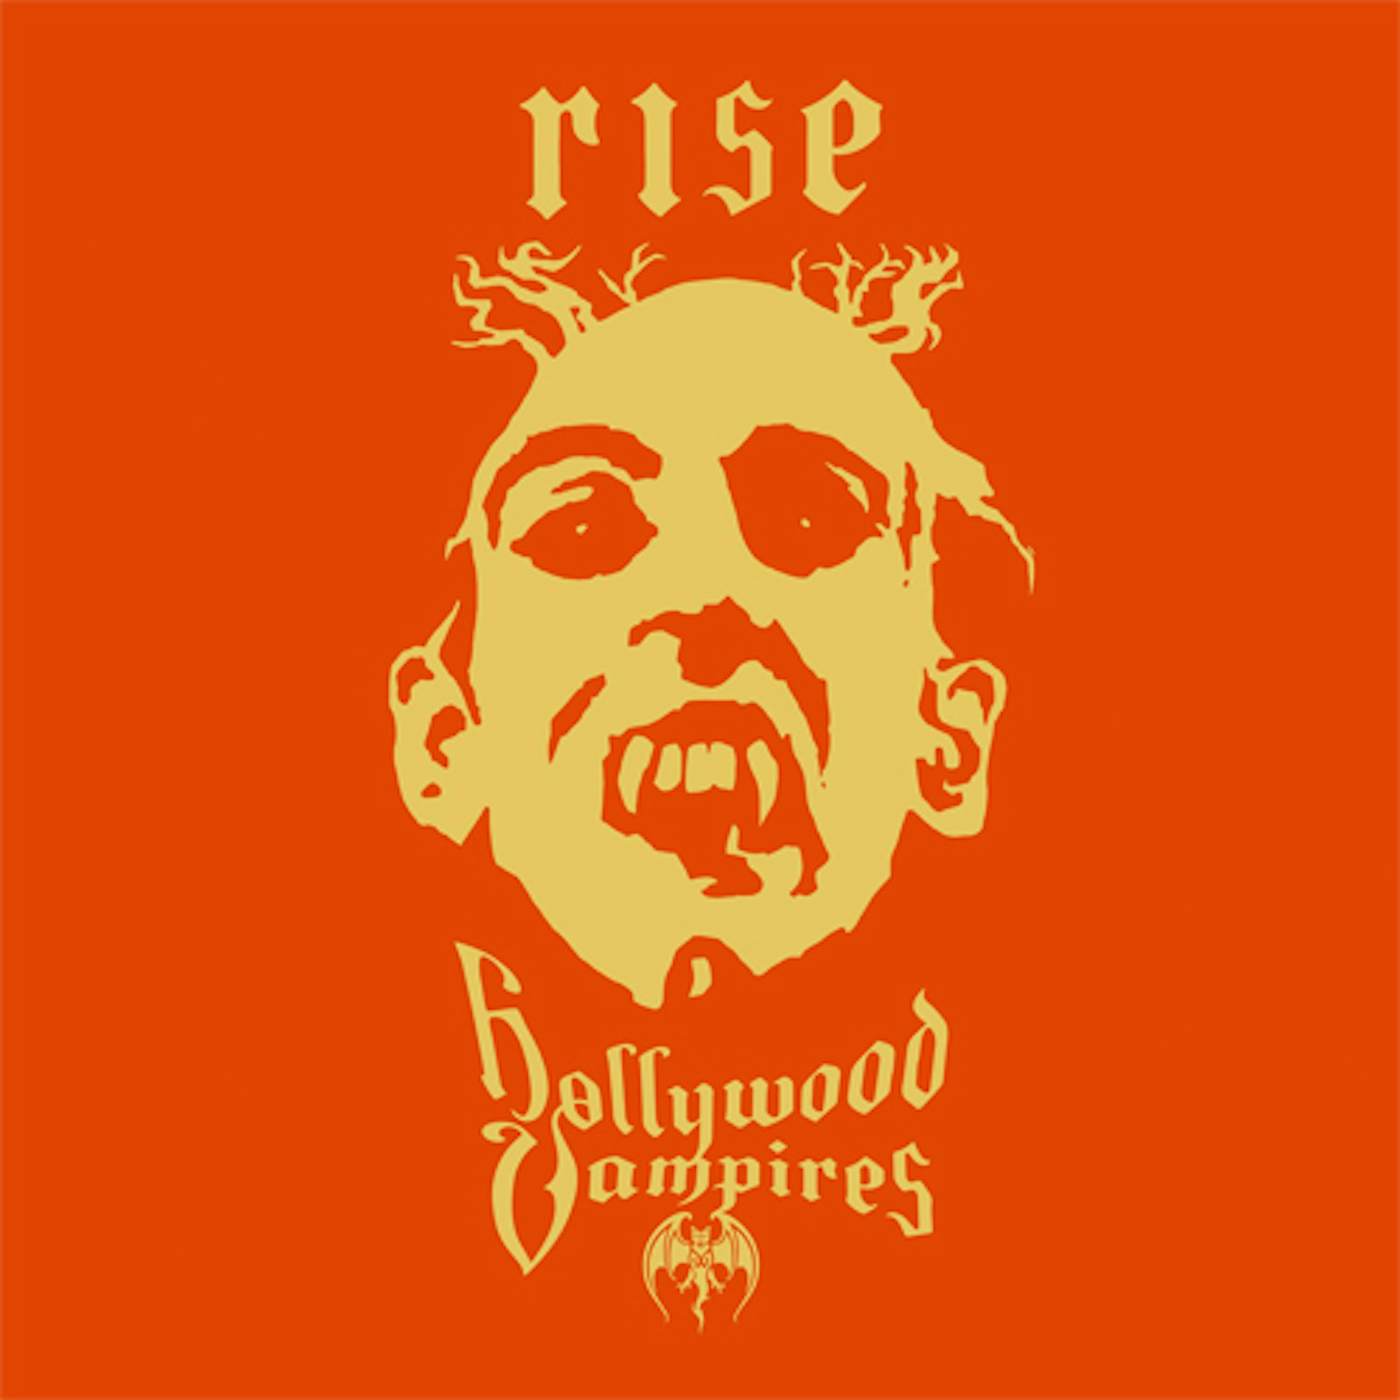 Hollywood Vampires RISE (GLOW IN THE DARK VINYL) Vinyl Record